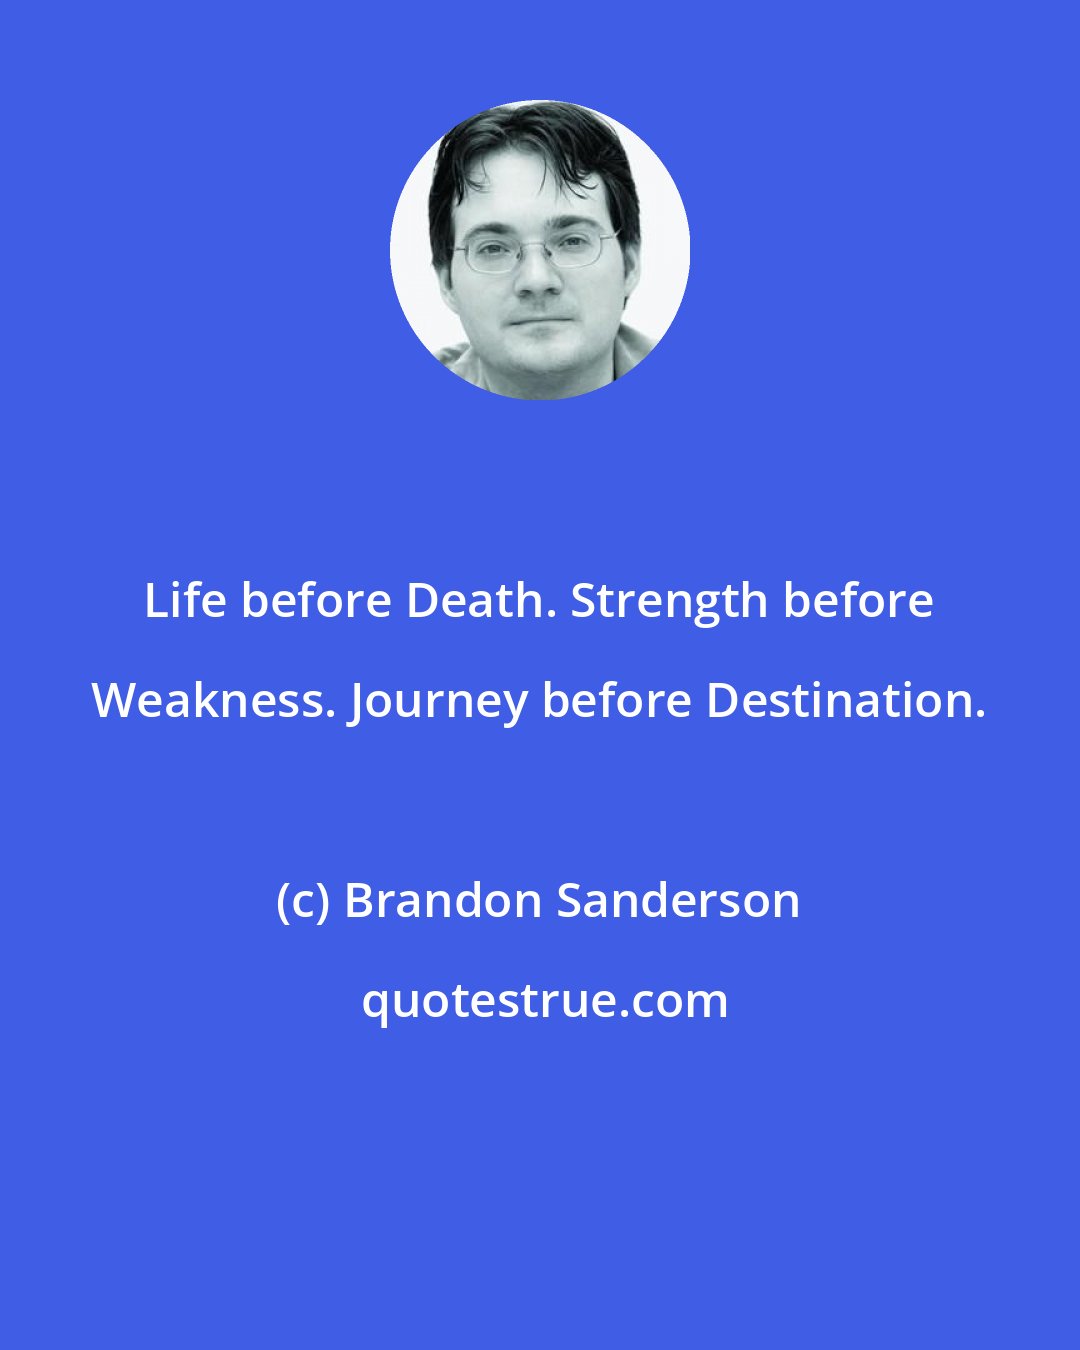 Brandon Sanderson: Life before Death. Strength before Weakness. Journey before Destination.